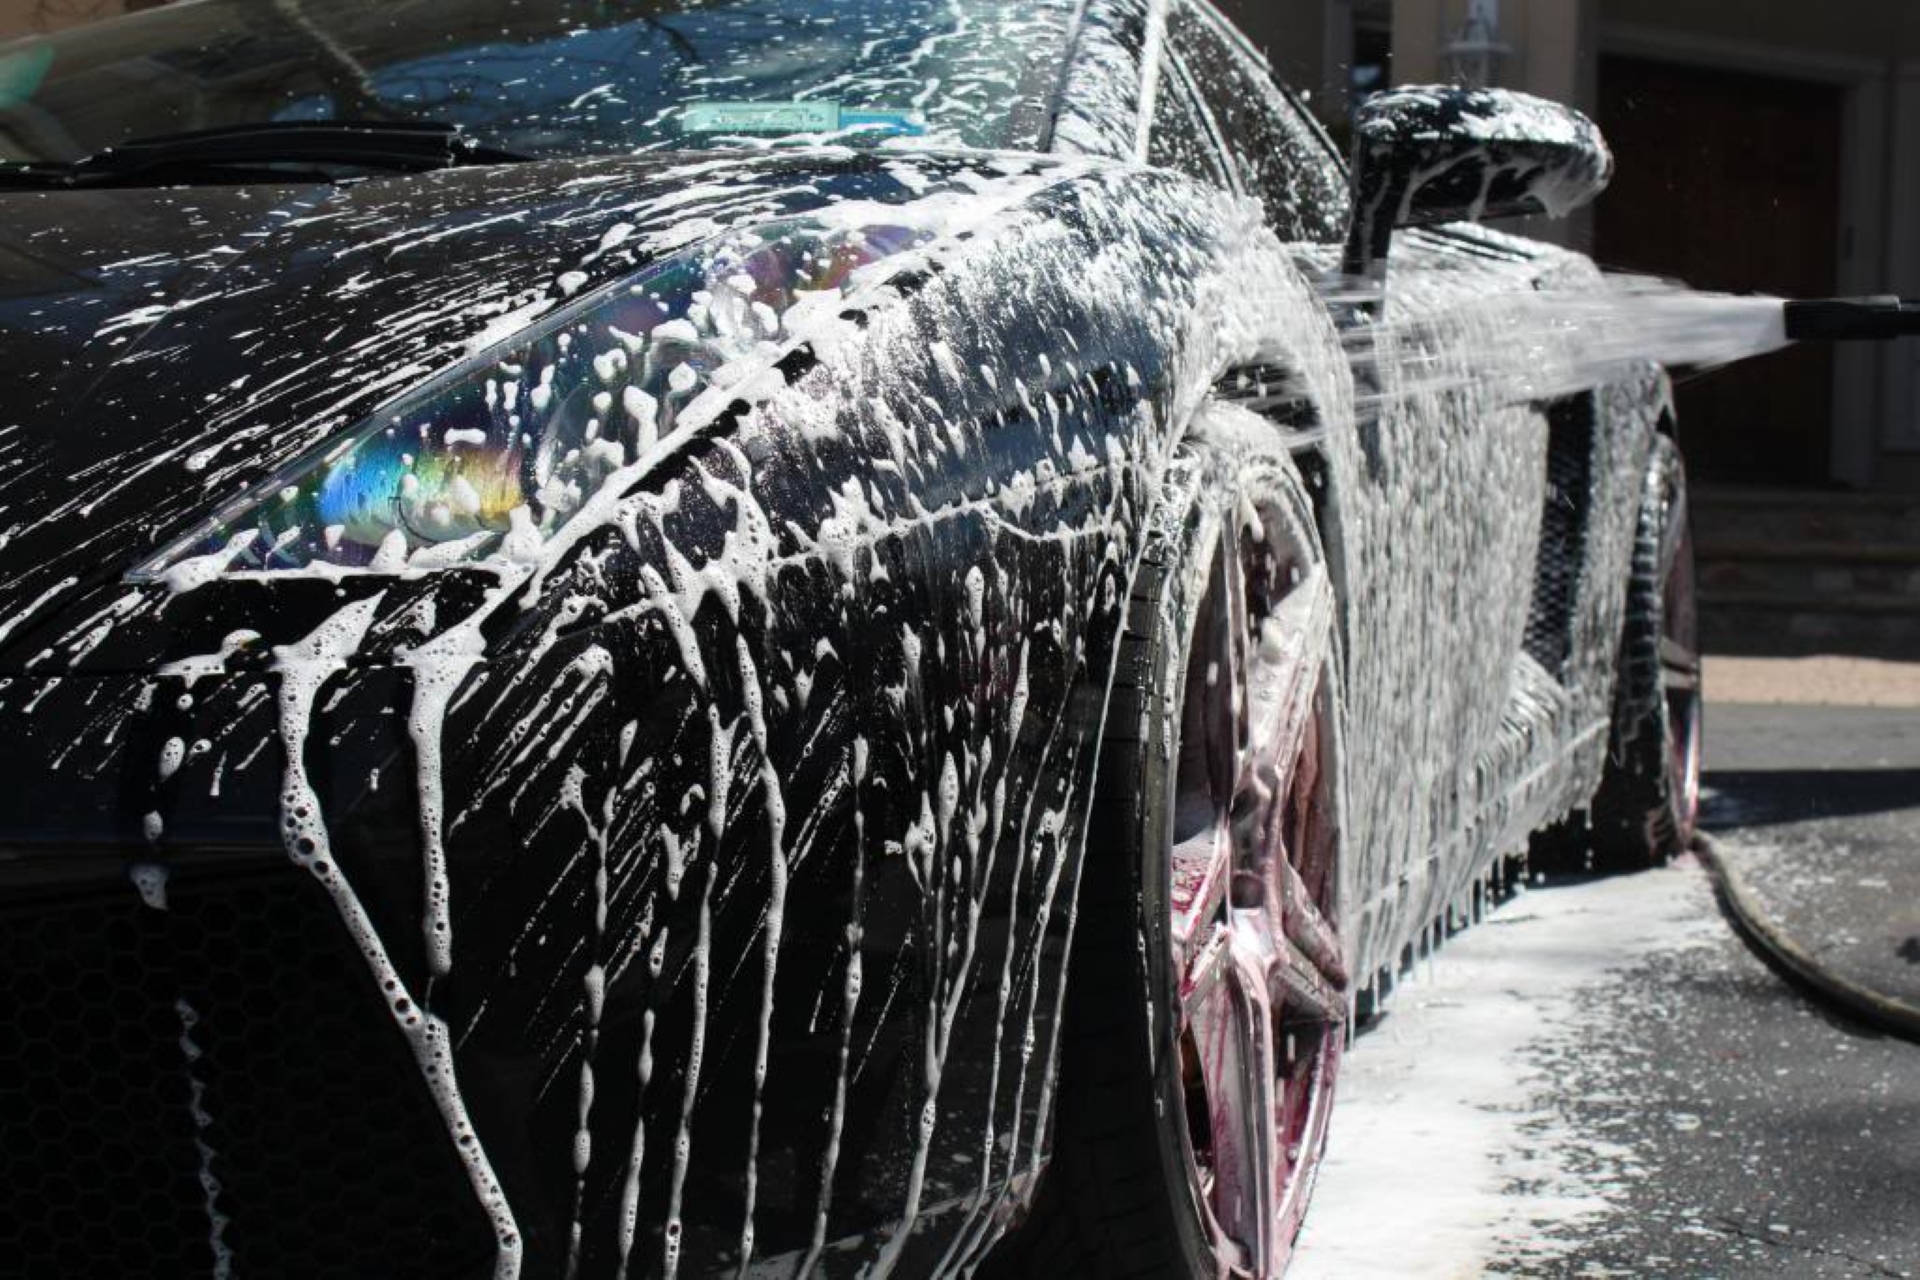 Black Sports Auto Car Wash Background